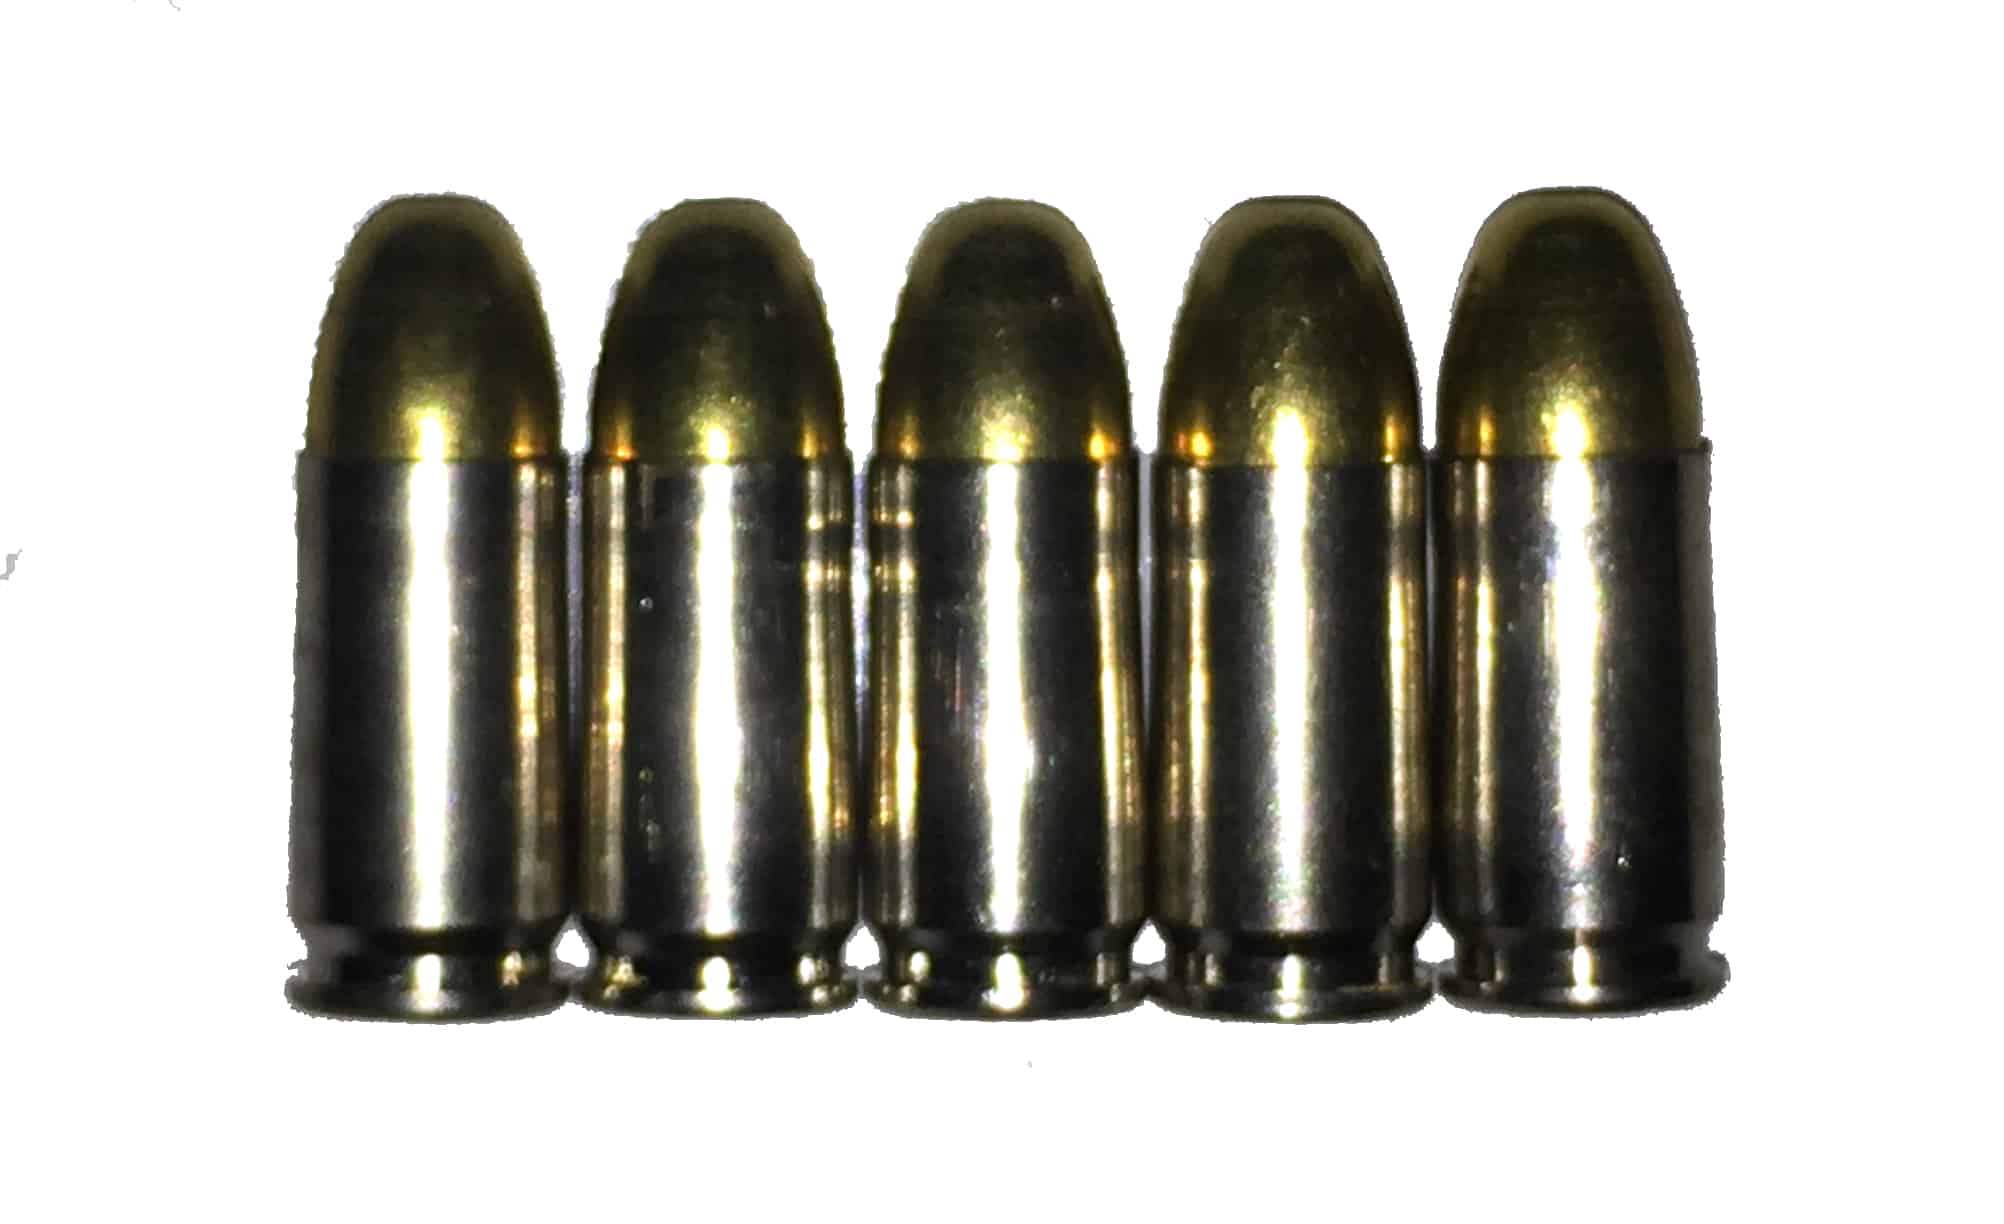 9x19 Luger Nickel Snap Caps Dummy Rounds Fake Bullets J&M Spec INERT